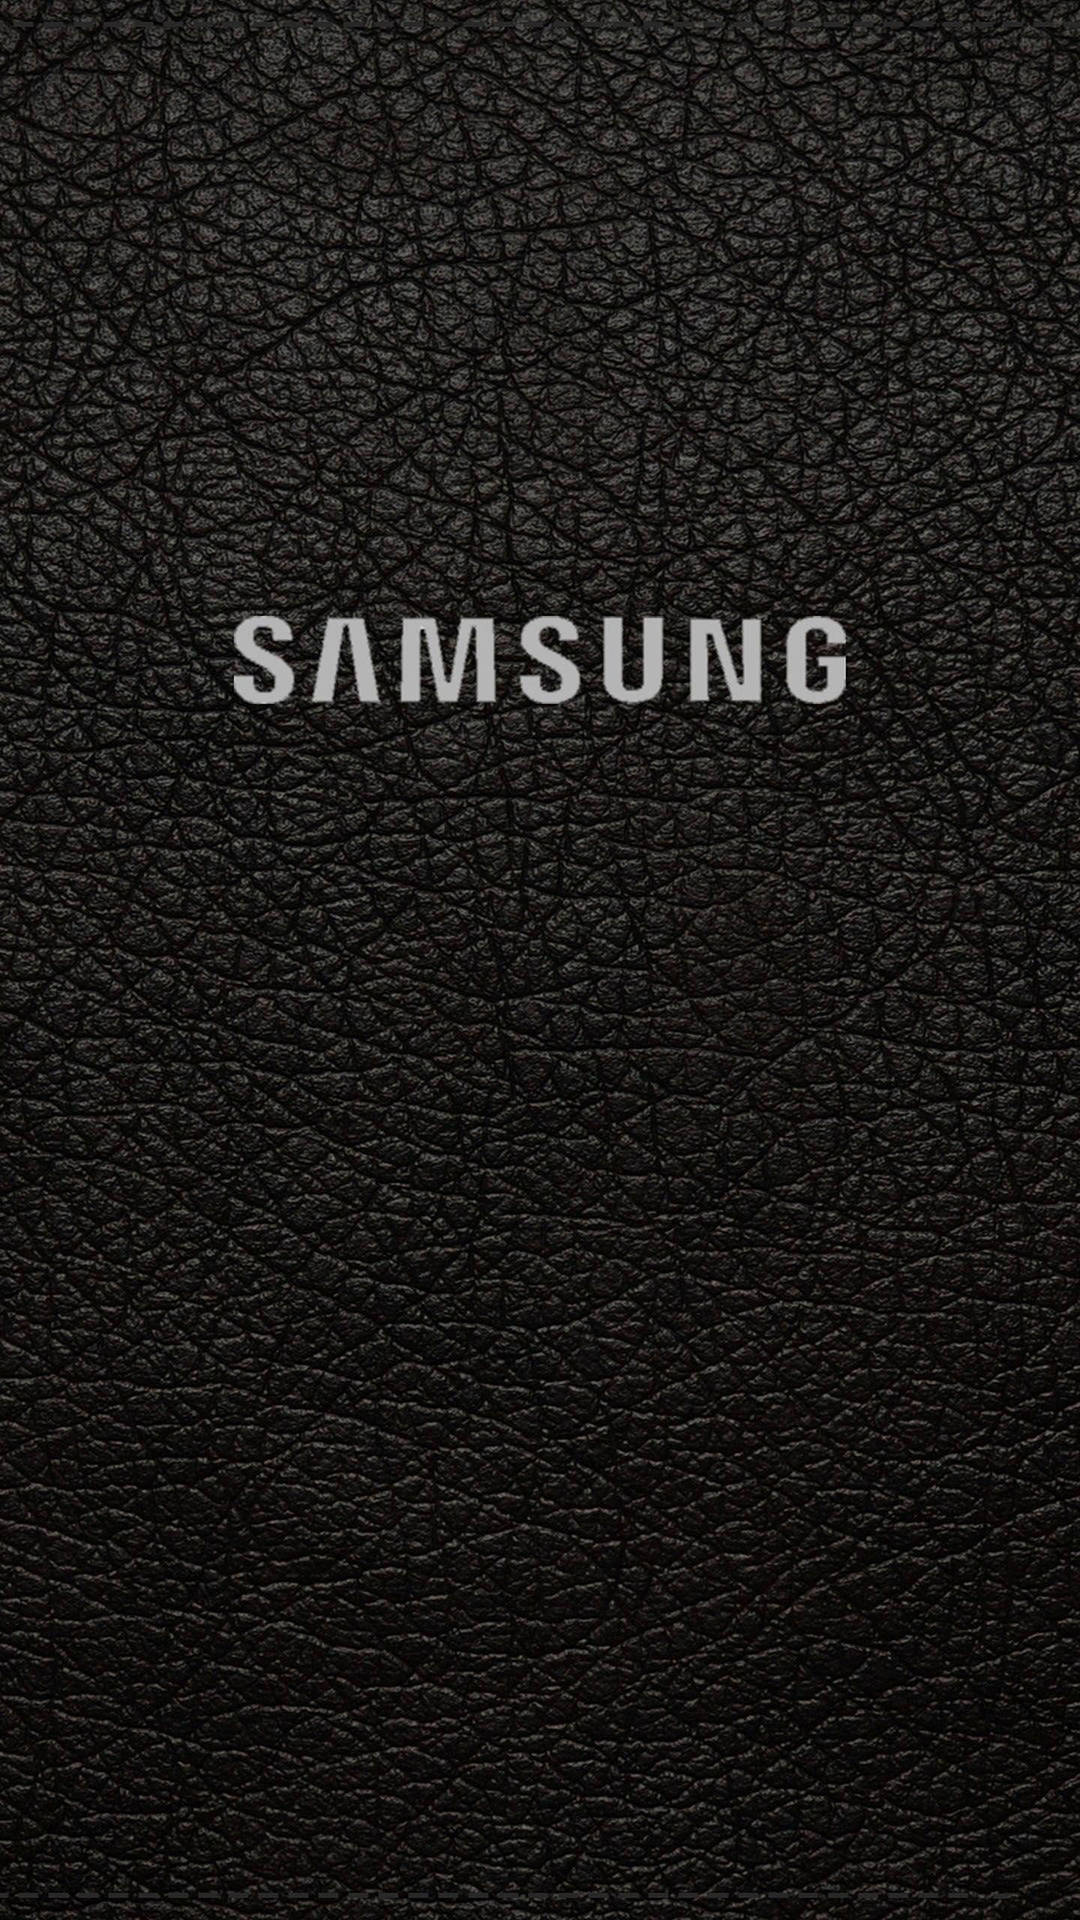 Samsung Mobil Wallpaper